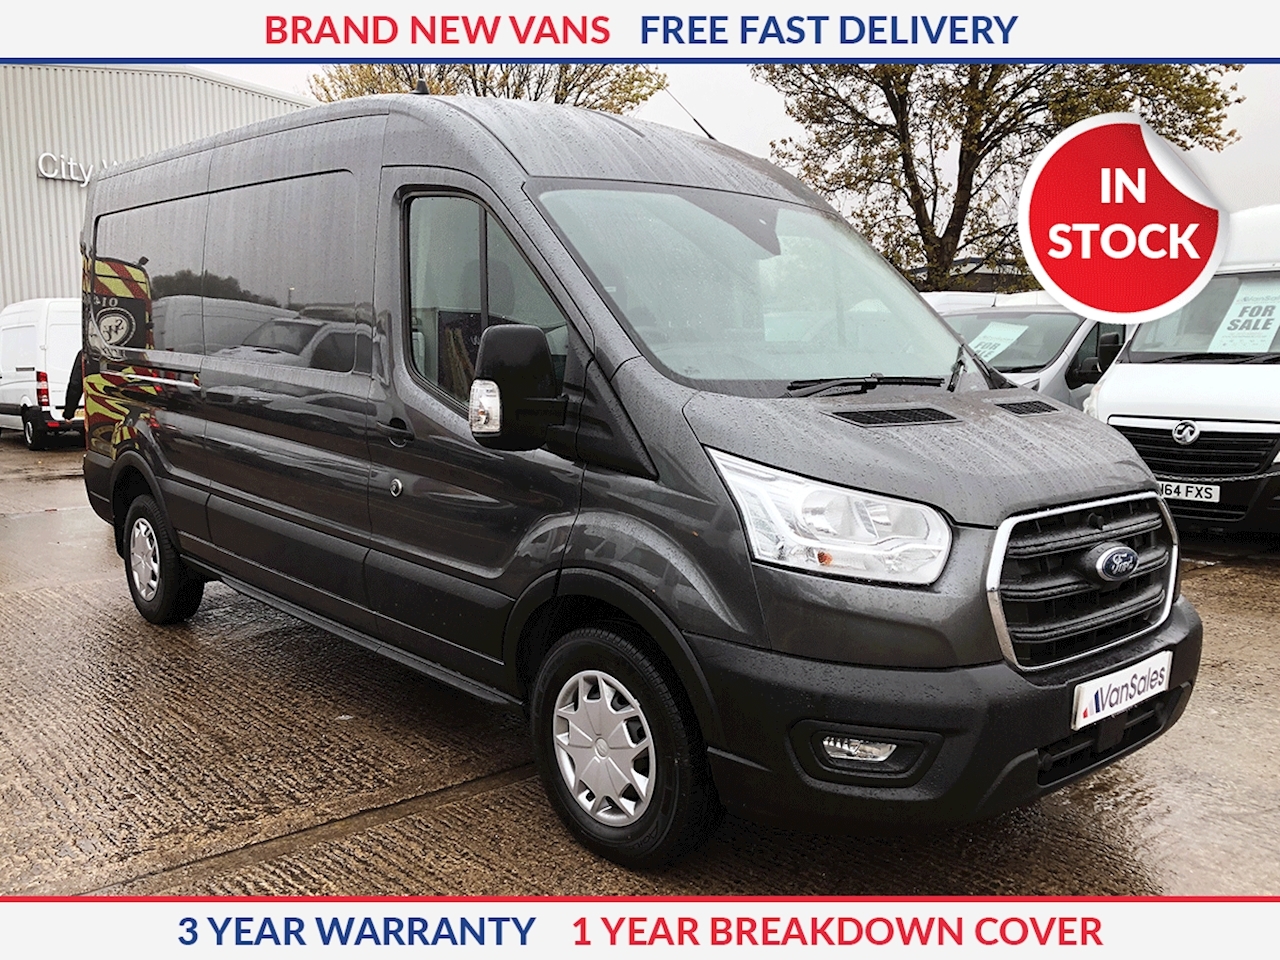 cheap new vans for sale uk